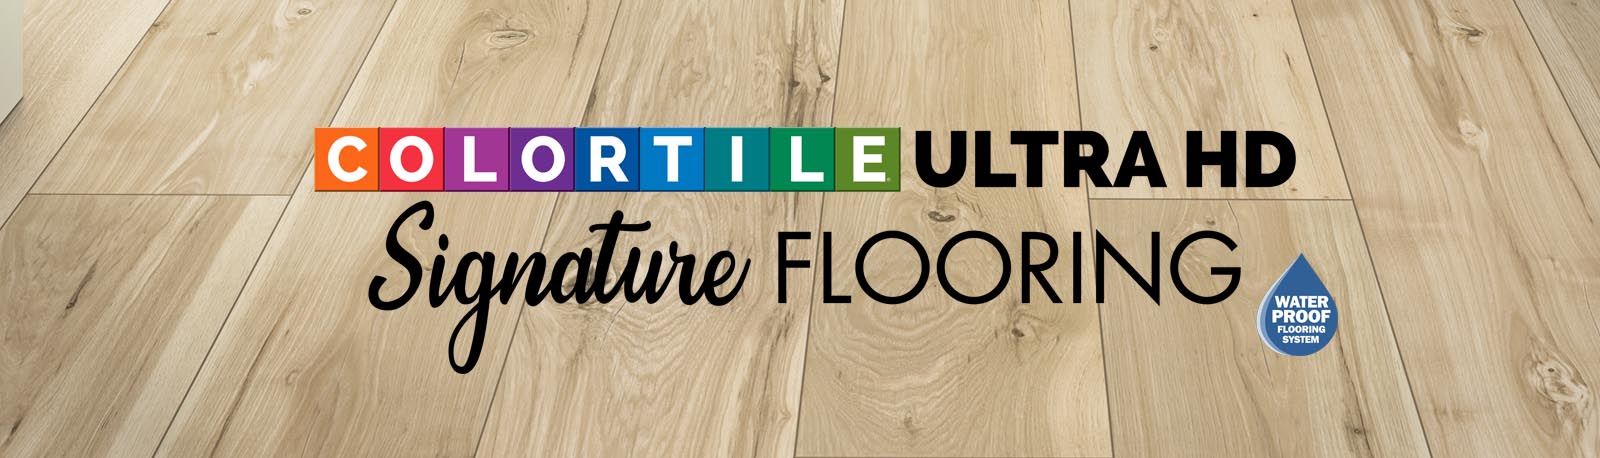 COLORTILE Ultra HD Signature Laminate Flooring